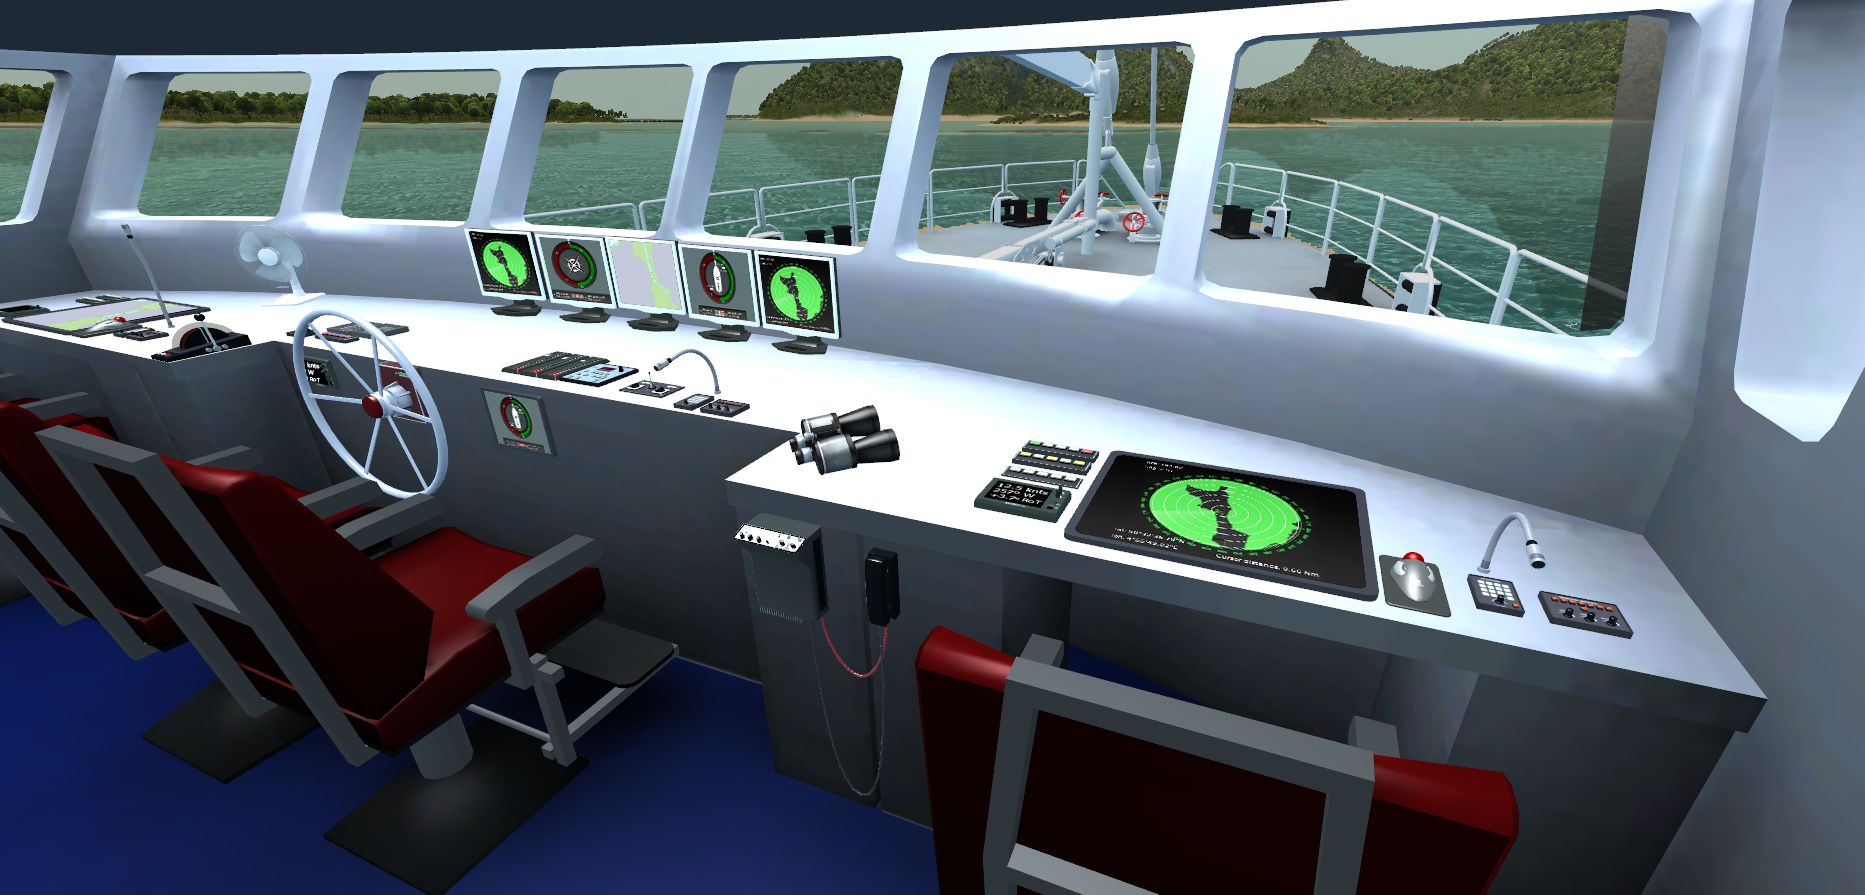 Ship Simulator Extremes On Steam - roblox boat simulator